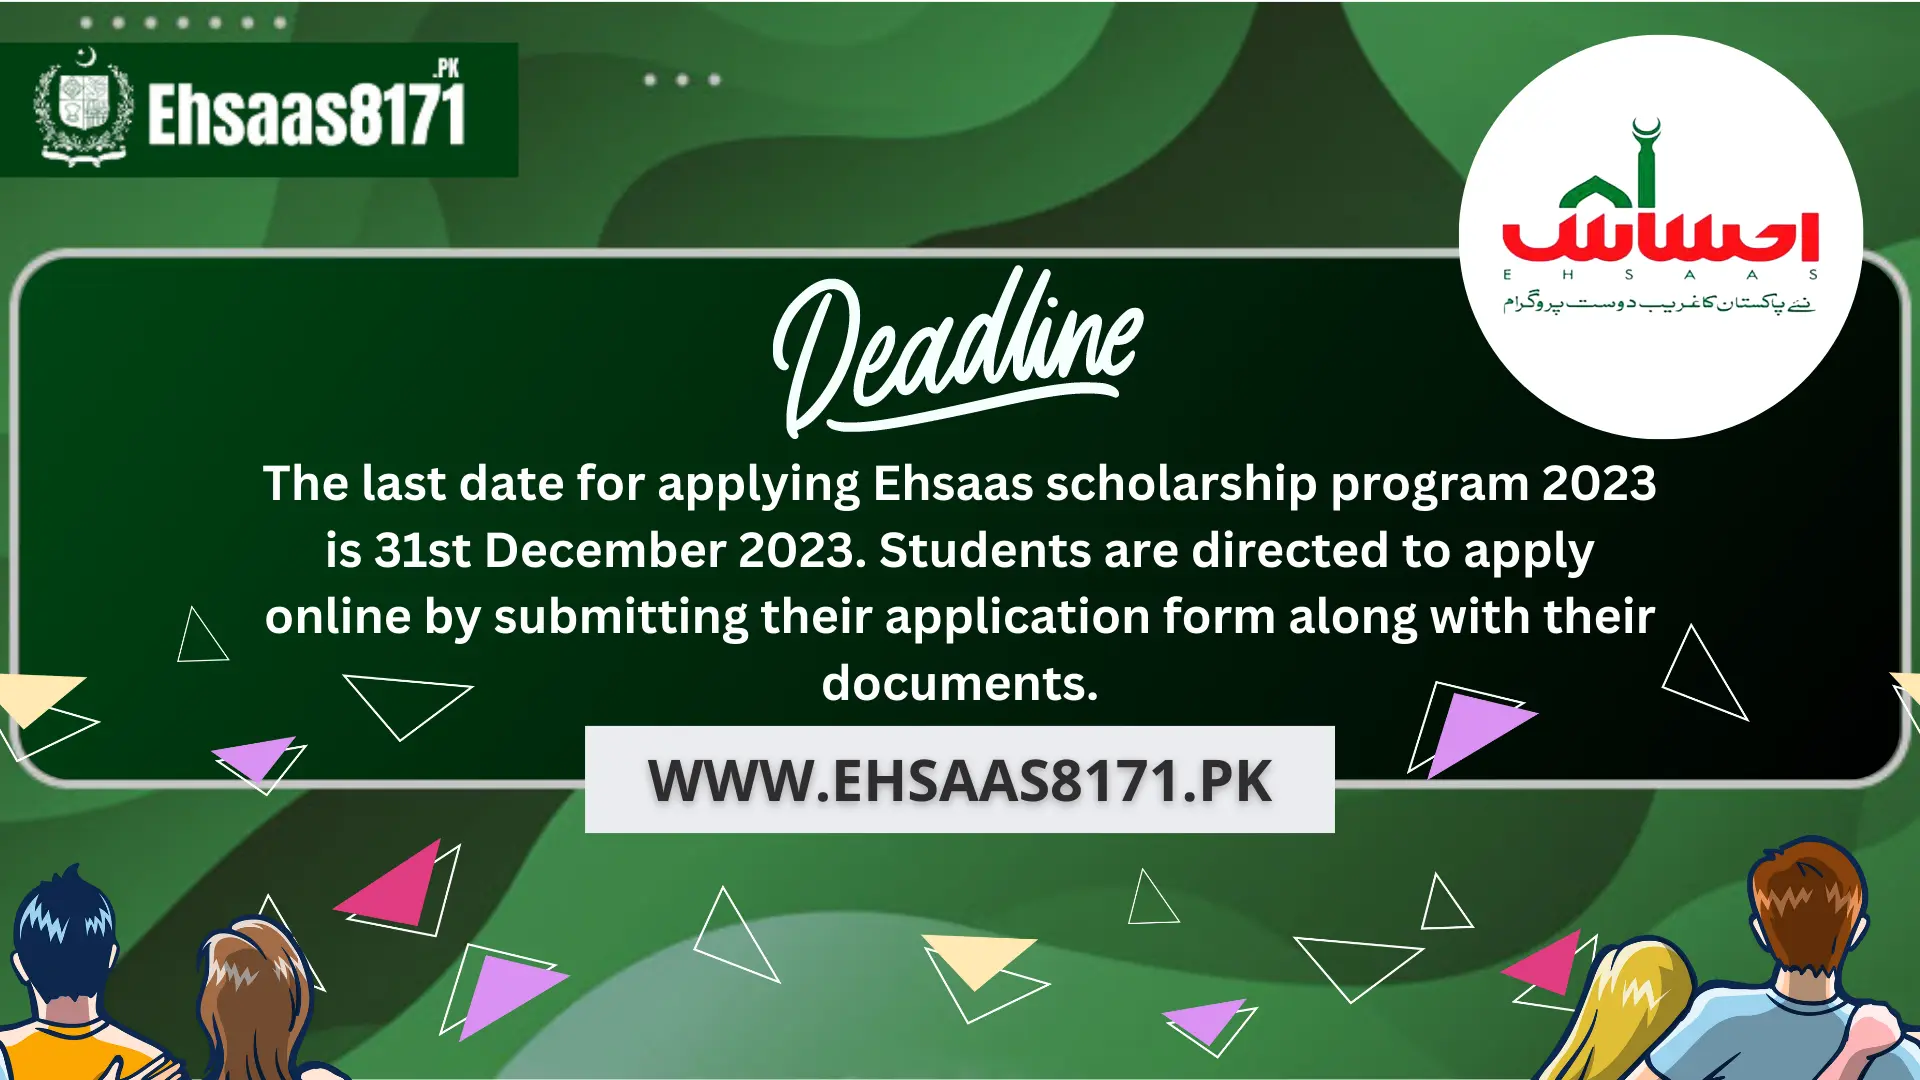 Ehsaas scholarship program 2023 deadline